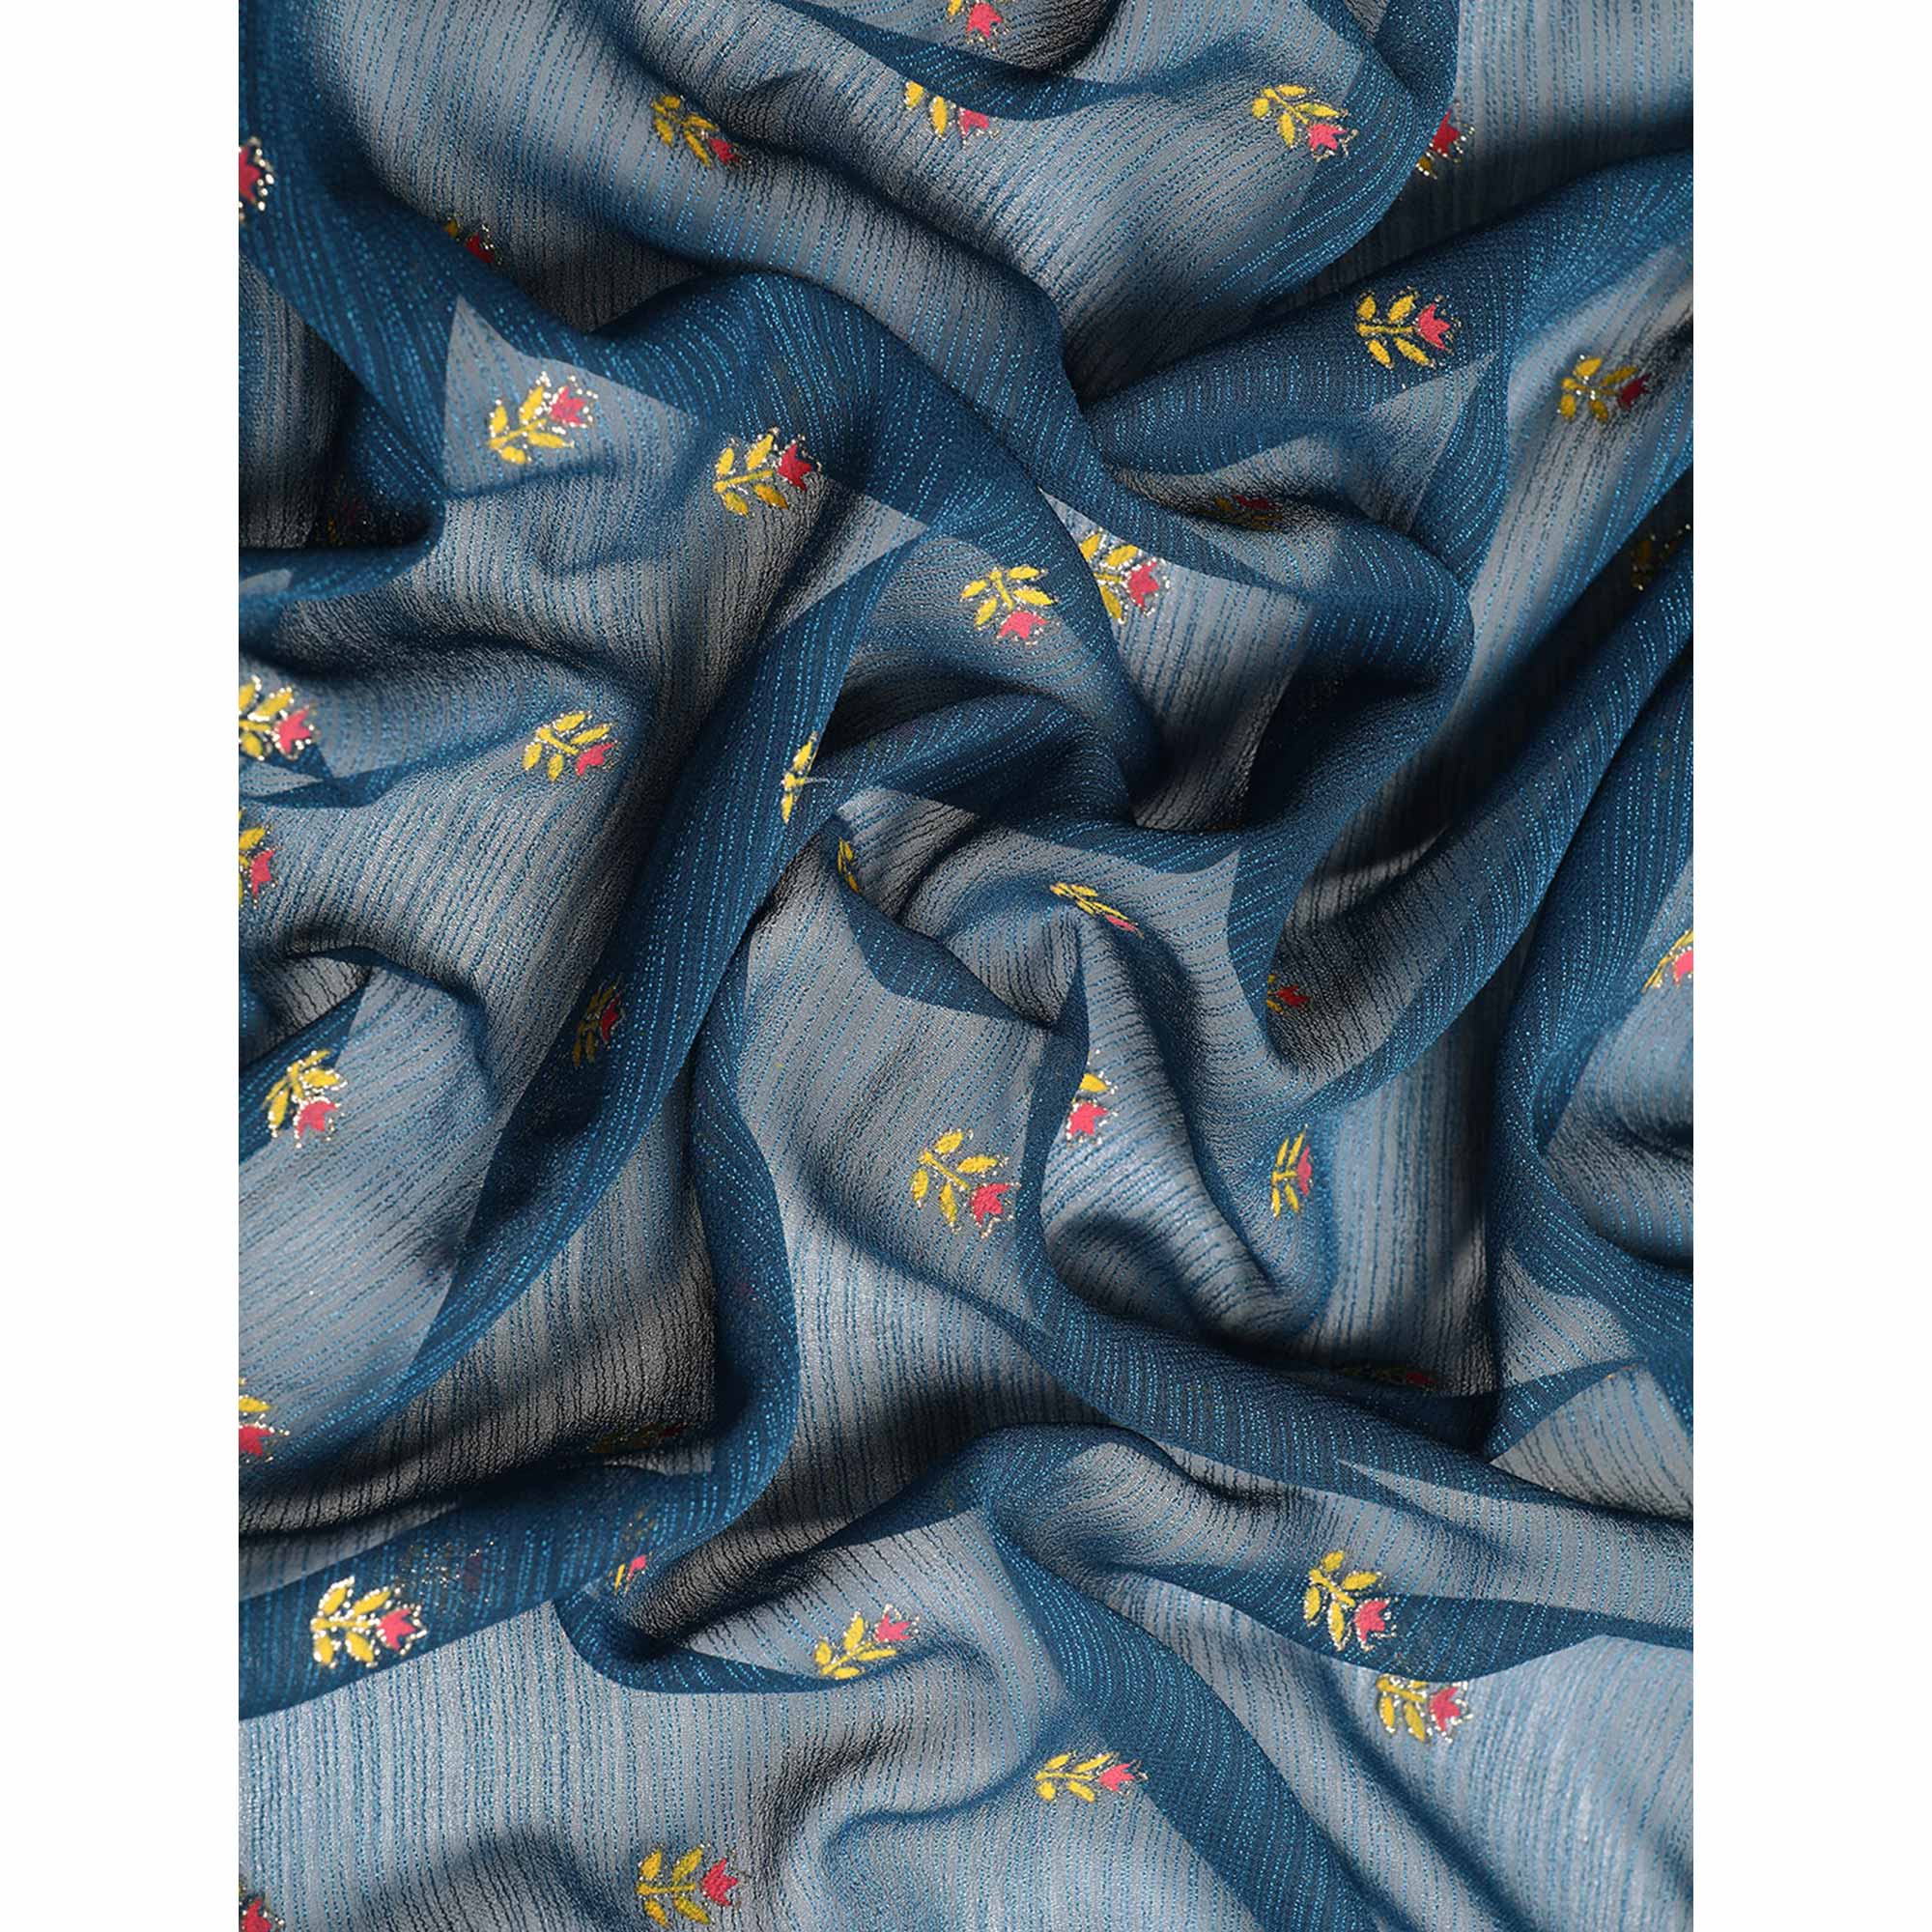 Teal Blue Embroidered Chiffon Saree